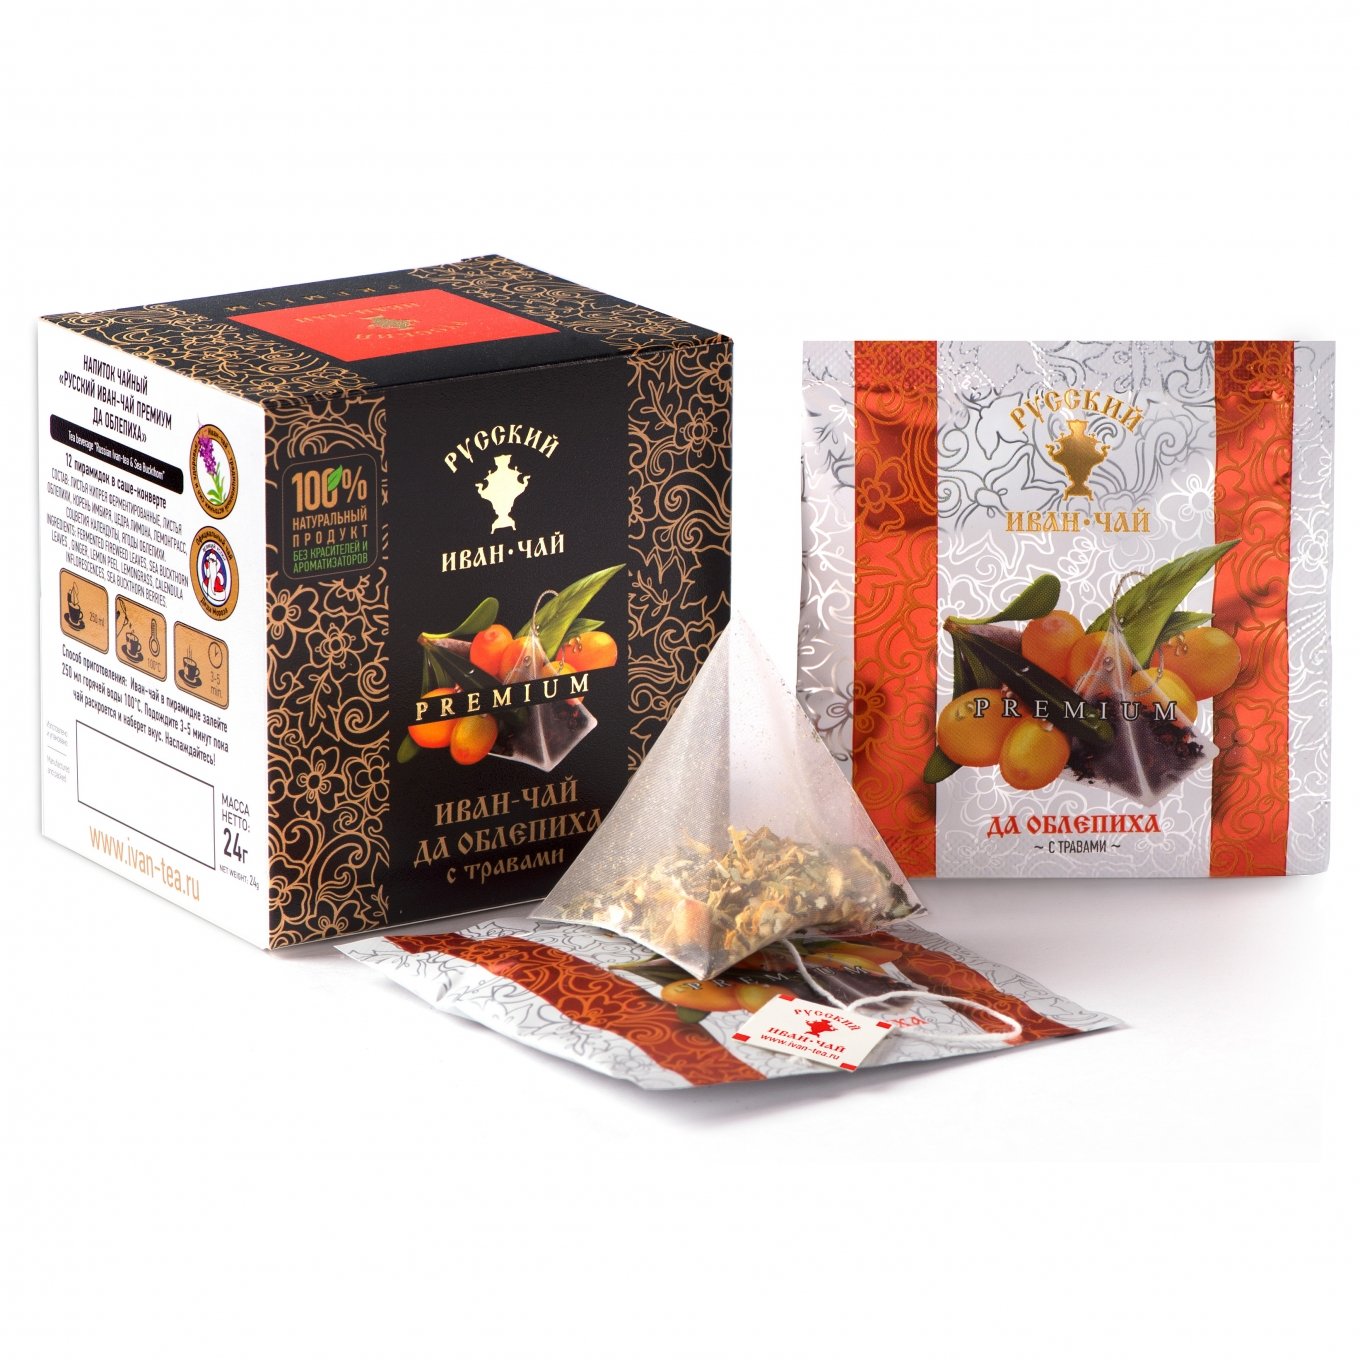 Premium Ivan-Tea and Sea Buckthorn with Herbs, 12 pyramids *2gr